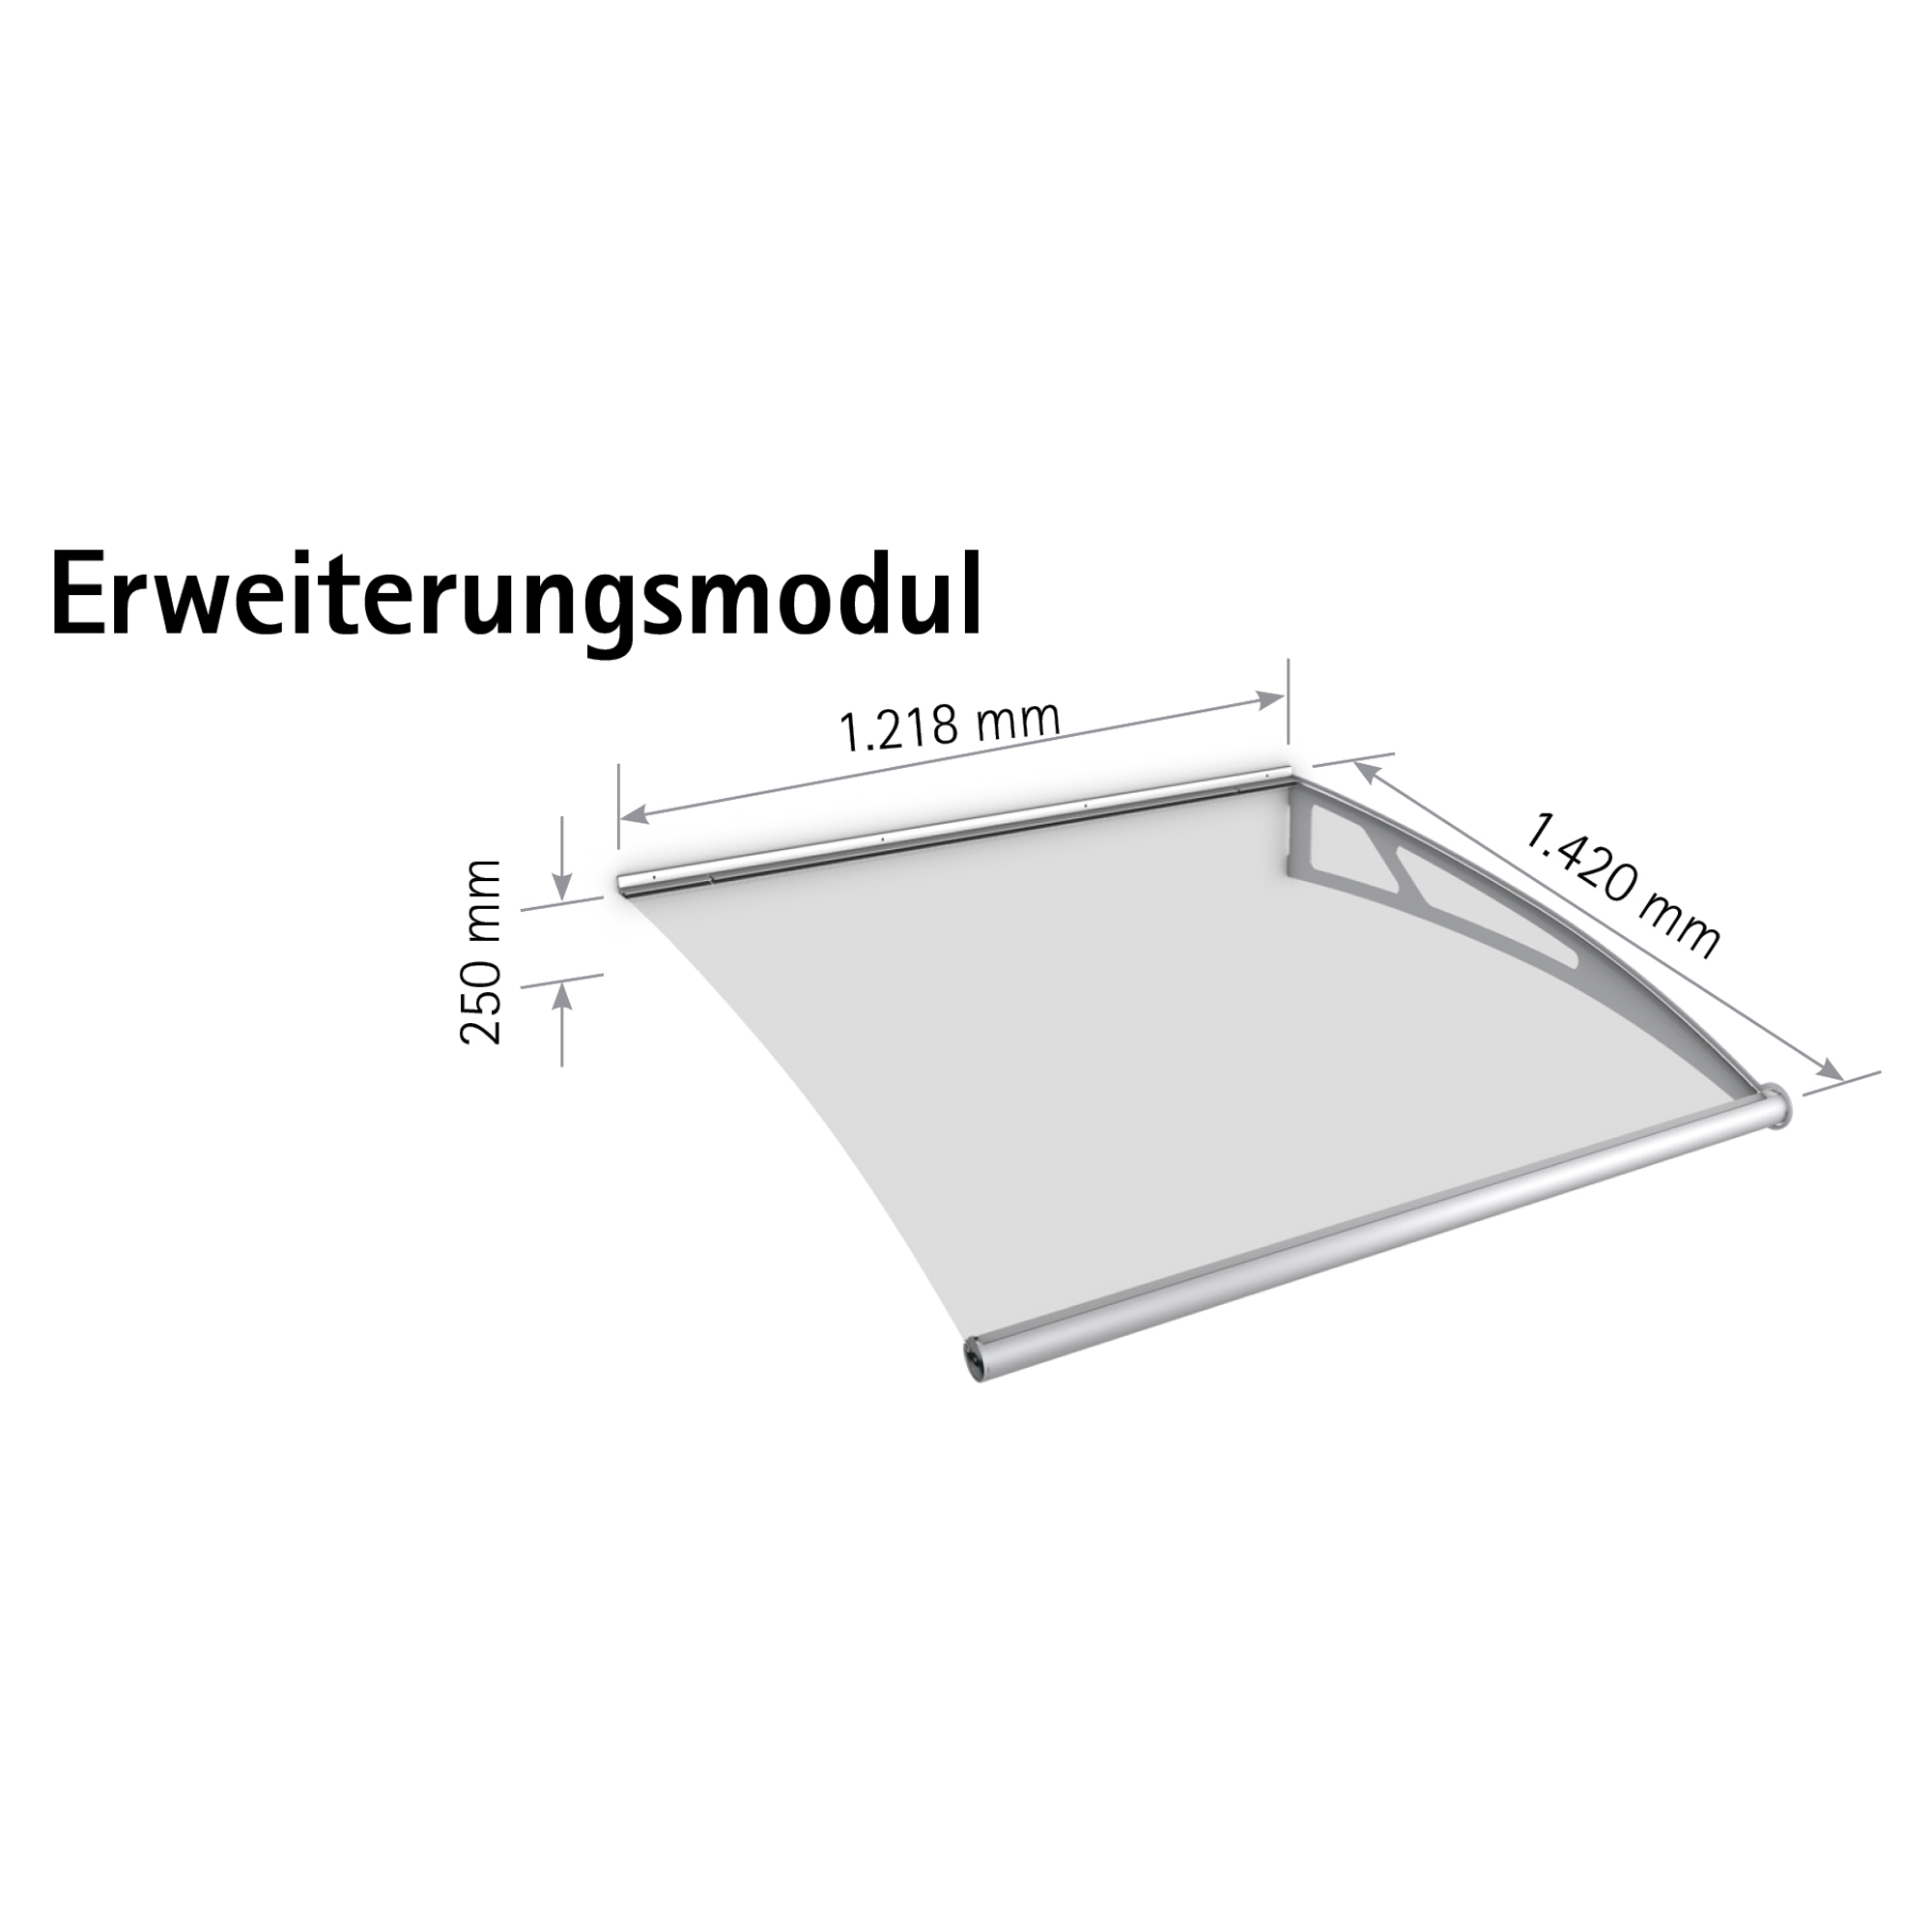 Pultbogen-Vordach "LT-Line" Edelstahl/Acrylglas klar 122 x 142 cm + product picture